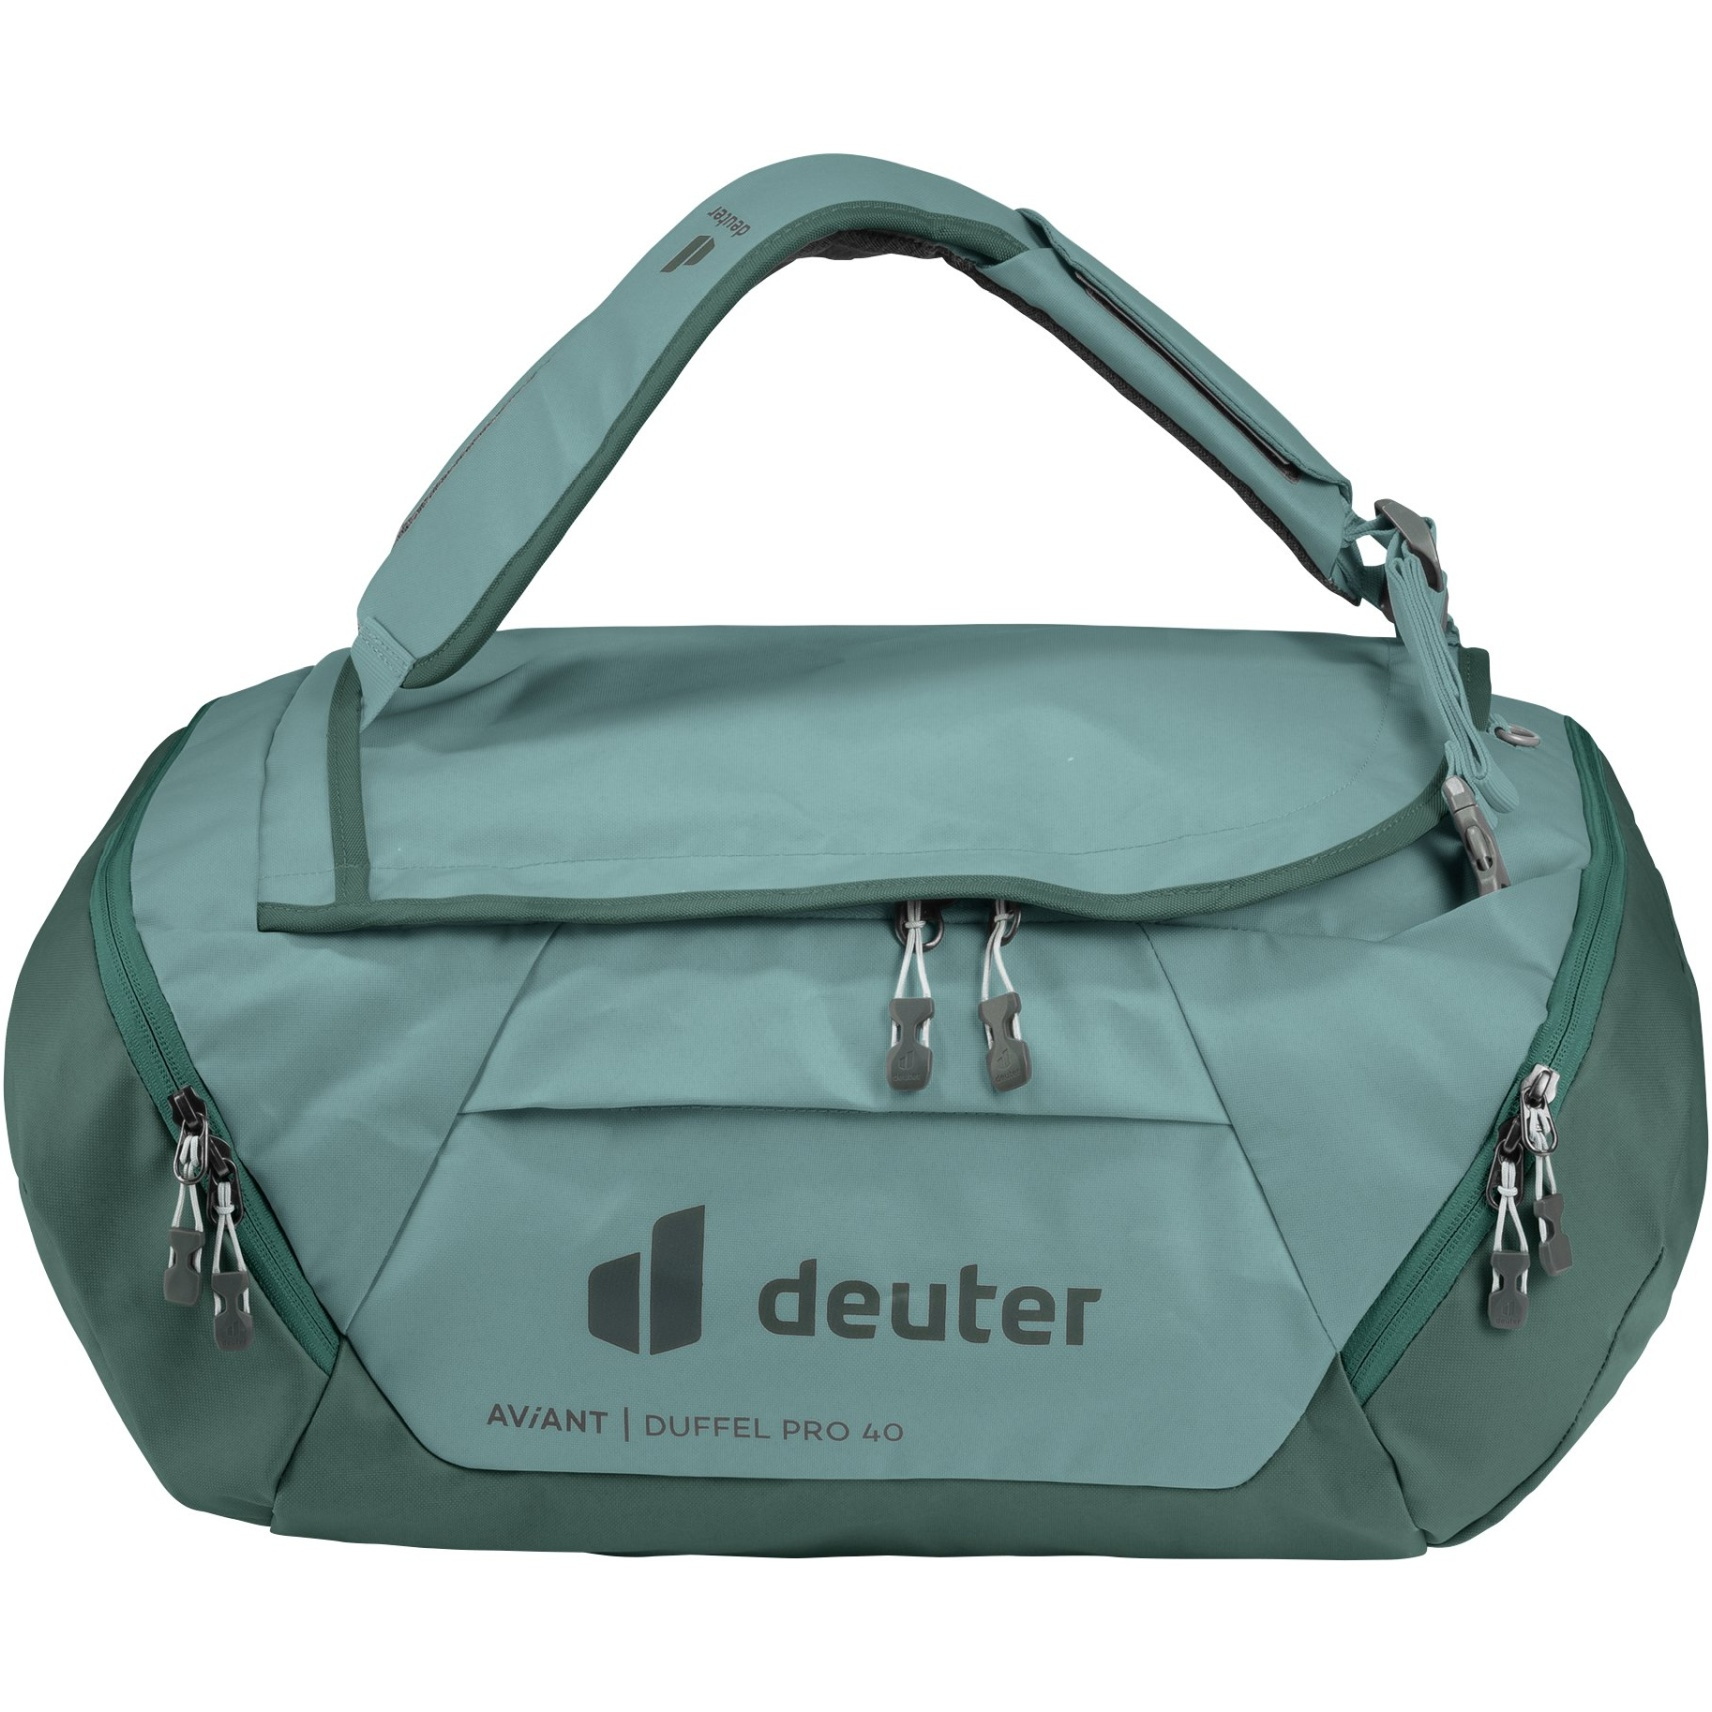 Deuter AViANT Duffel Pro 40 Reisetasche - jade-seagreen | BIKE24